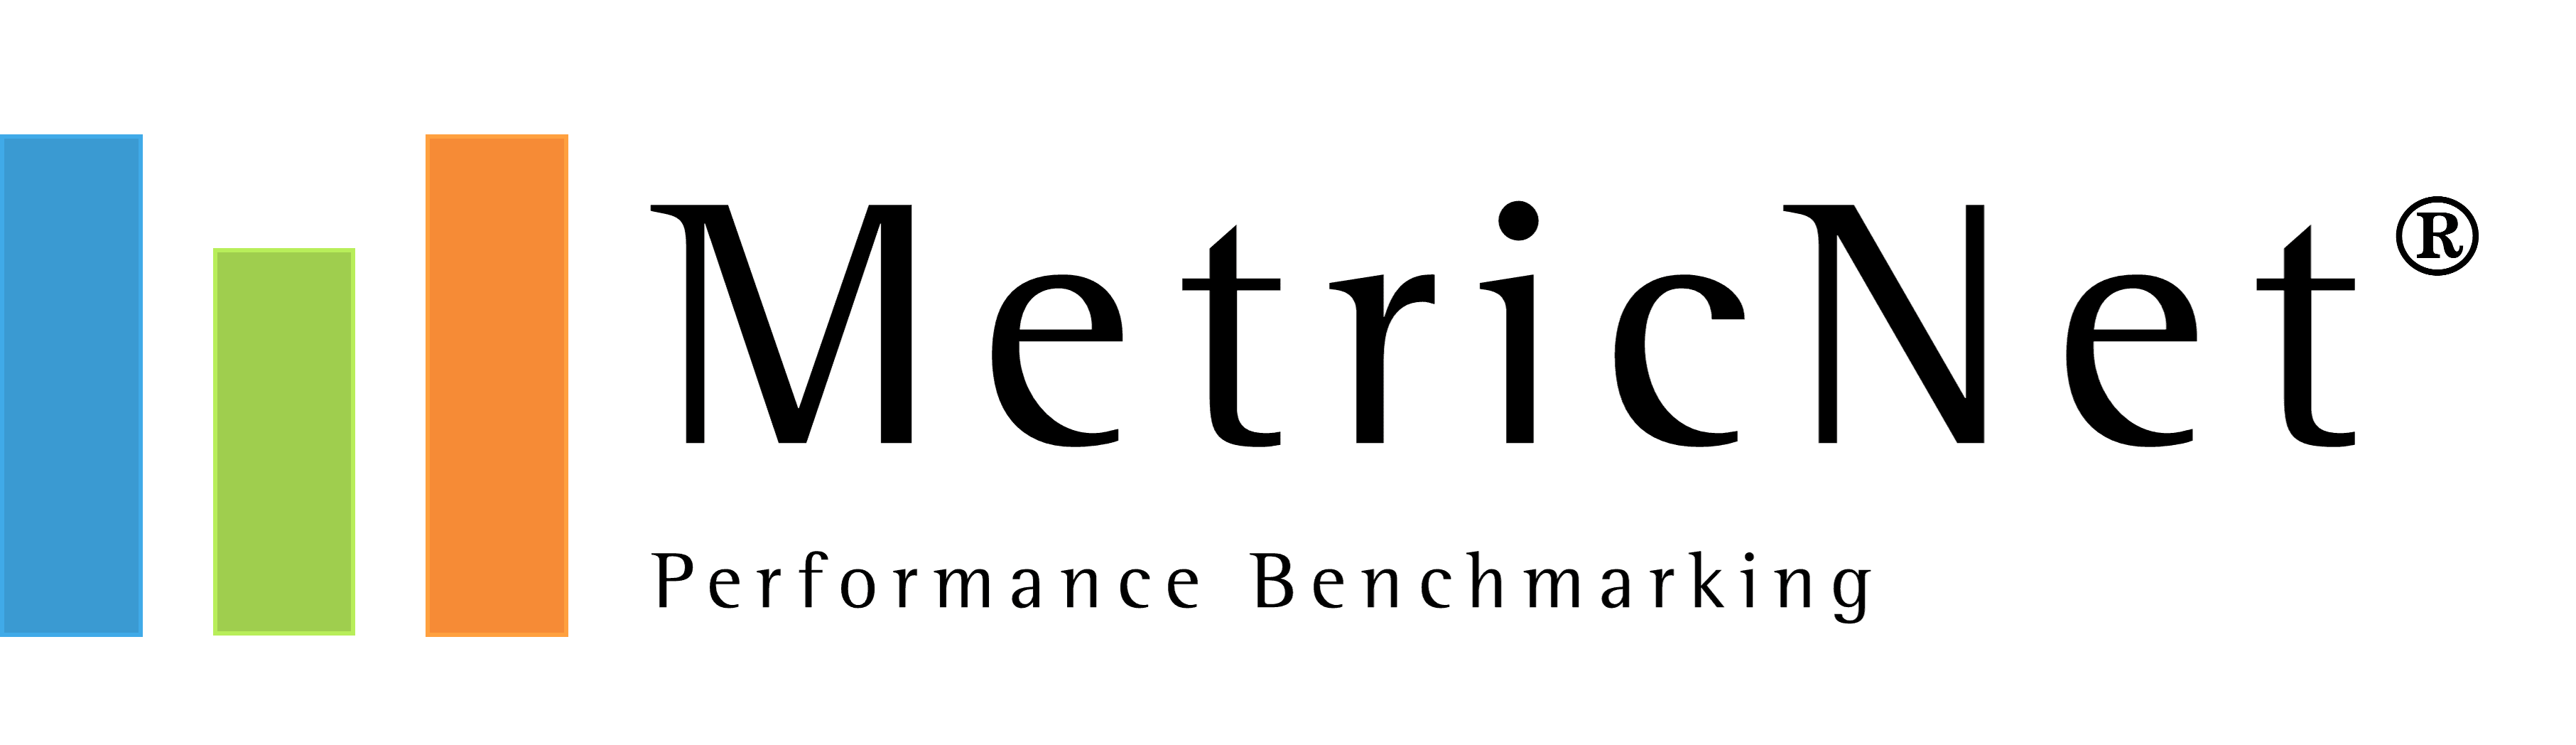 MetricNet